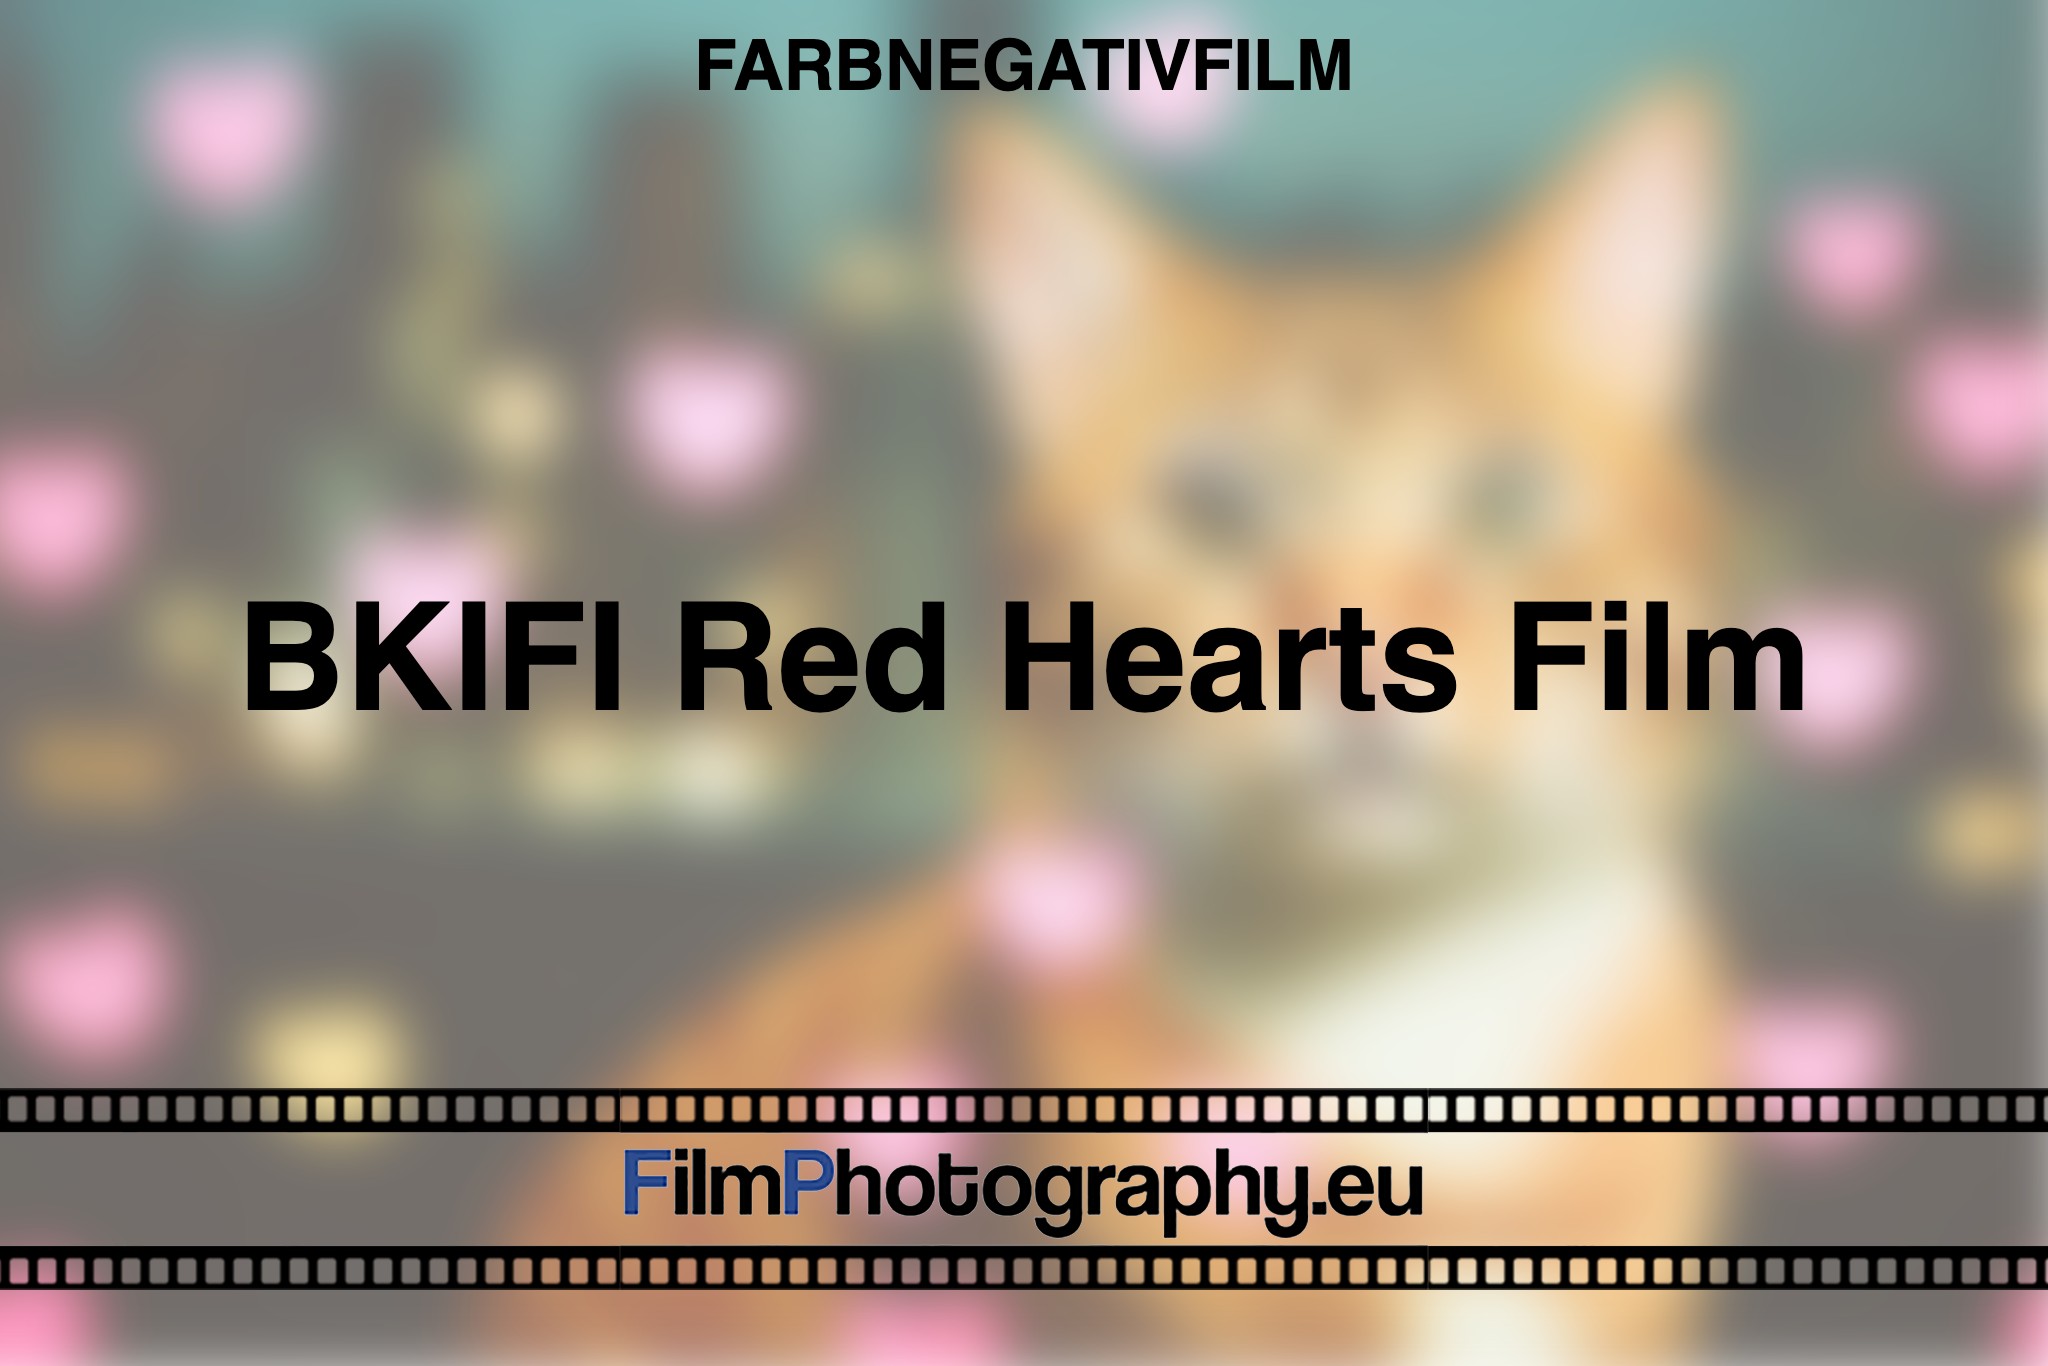 BKIFI-Red-Hearts-Film-Farbnegativfilm-bnv